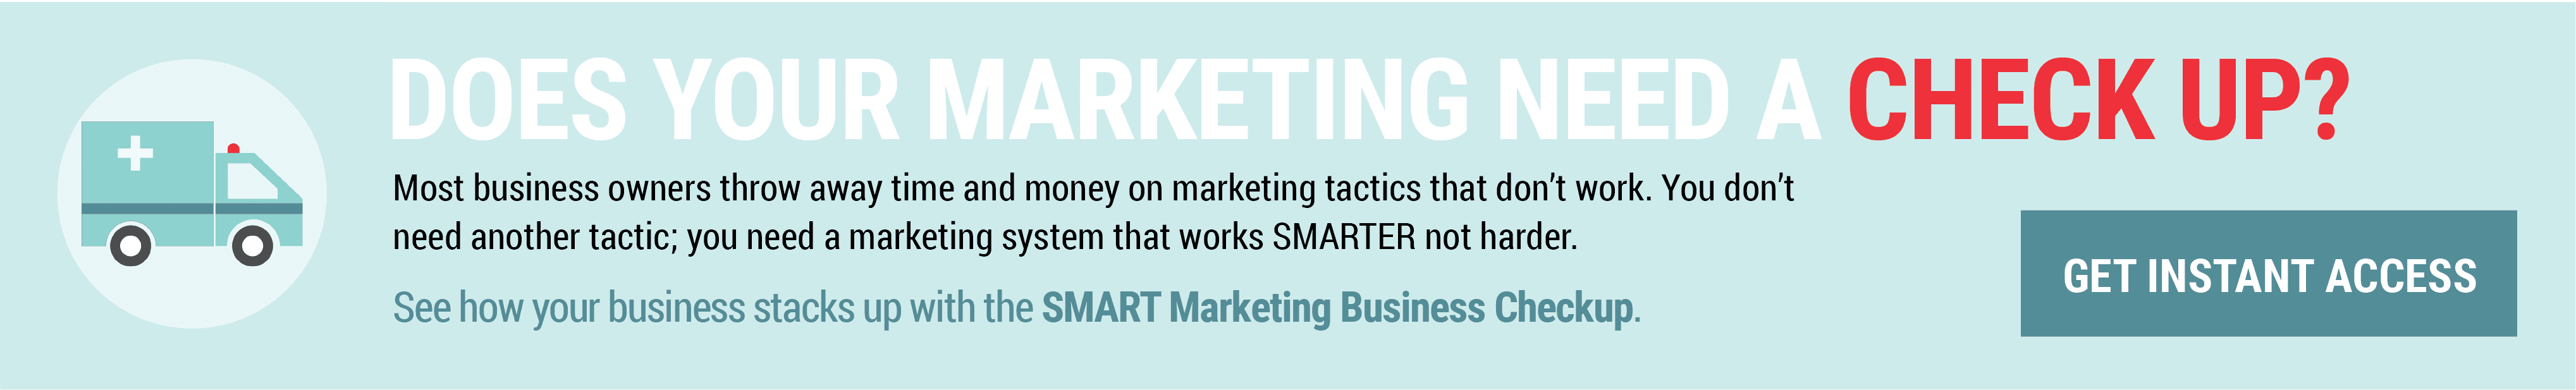 smart marketing checkup banners-02